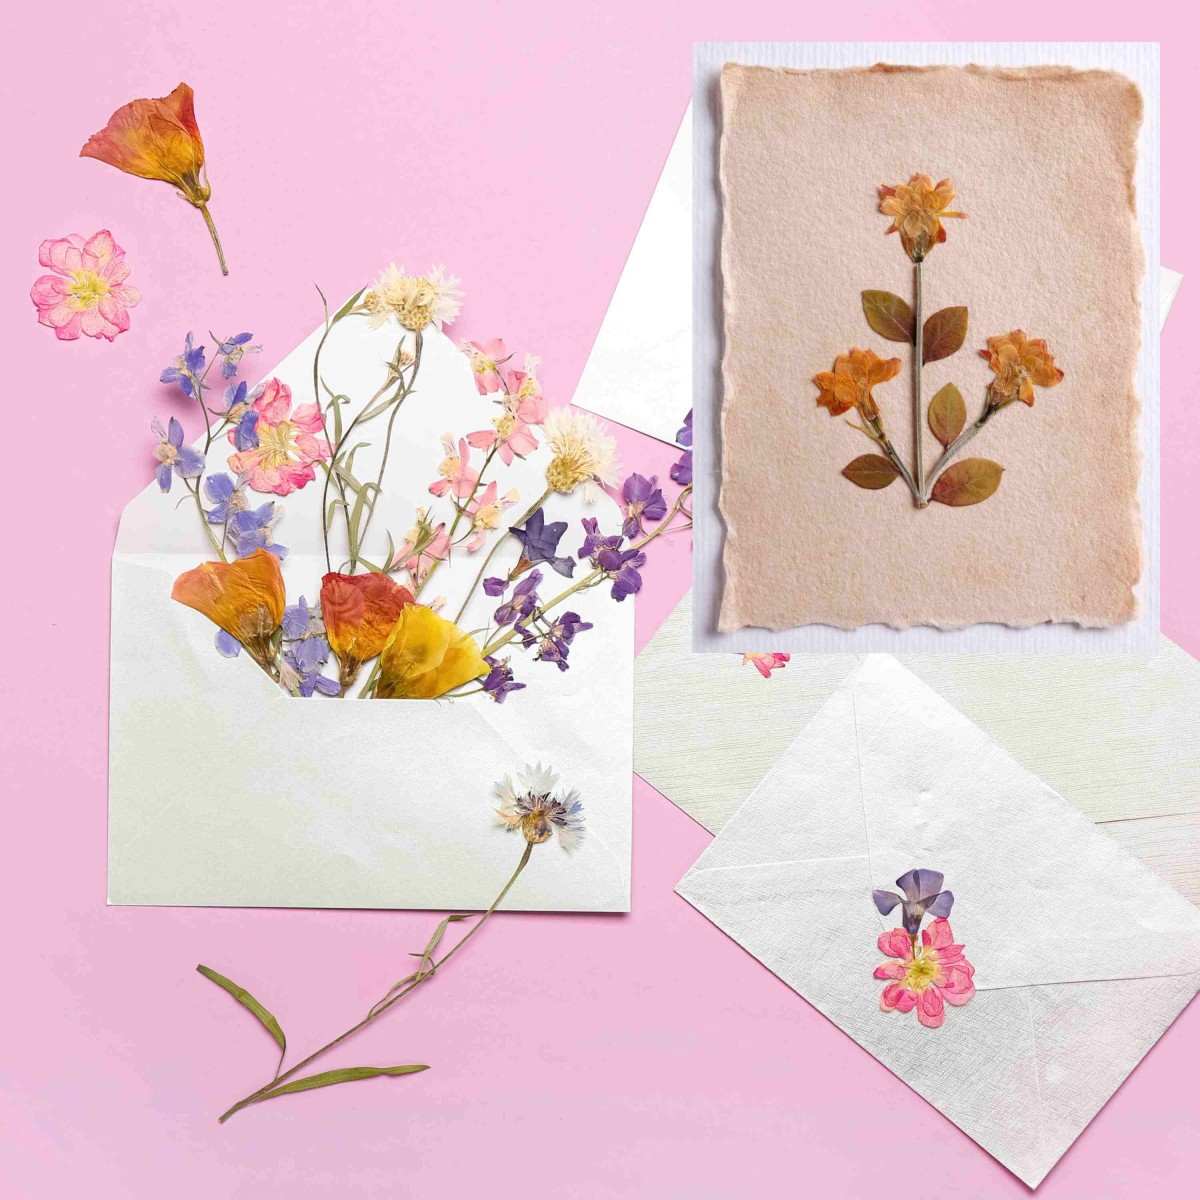 How to Make Beautiful Pressed Flower Art: A Beginner's Guide - FeltMagnet